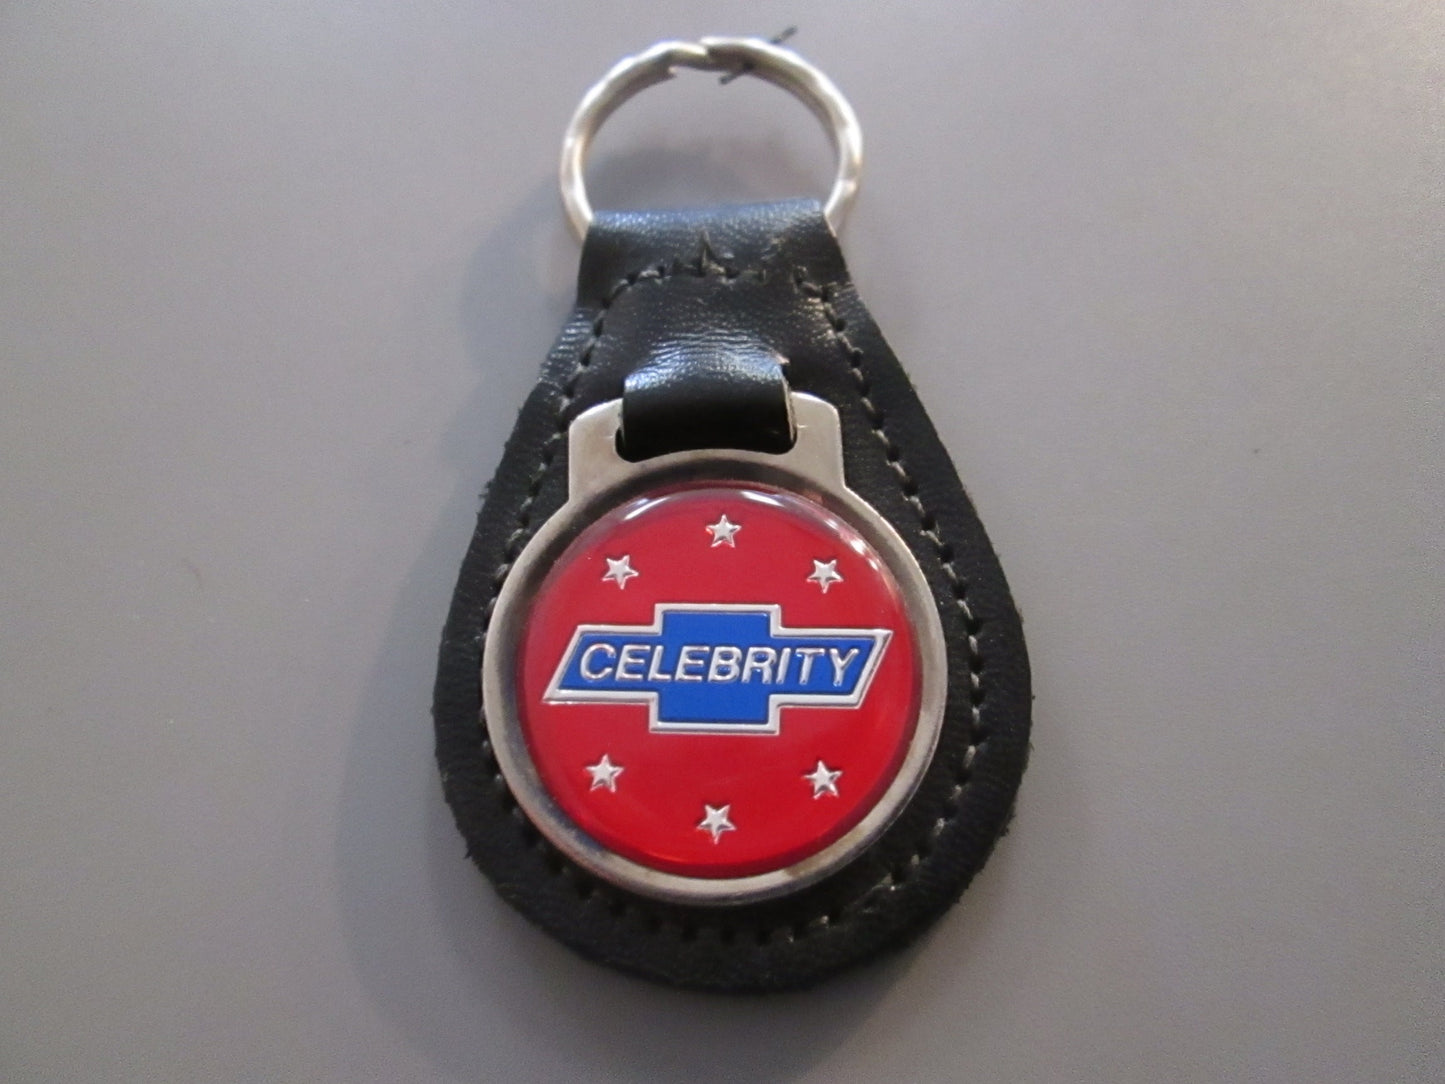 Vintage Leather Fob Key Holder for Chevy Celebrity